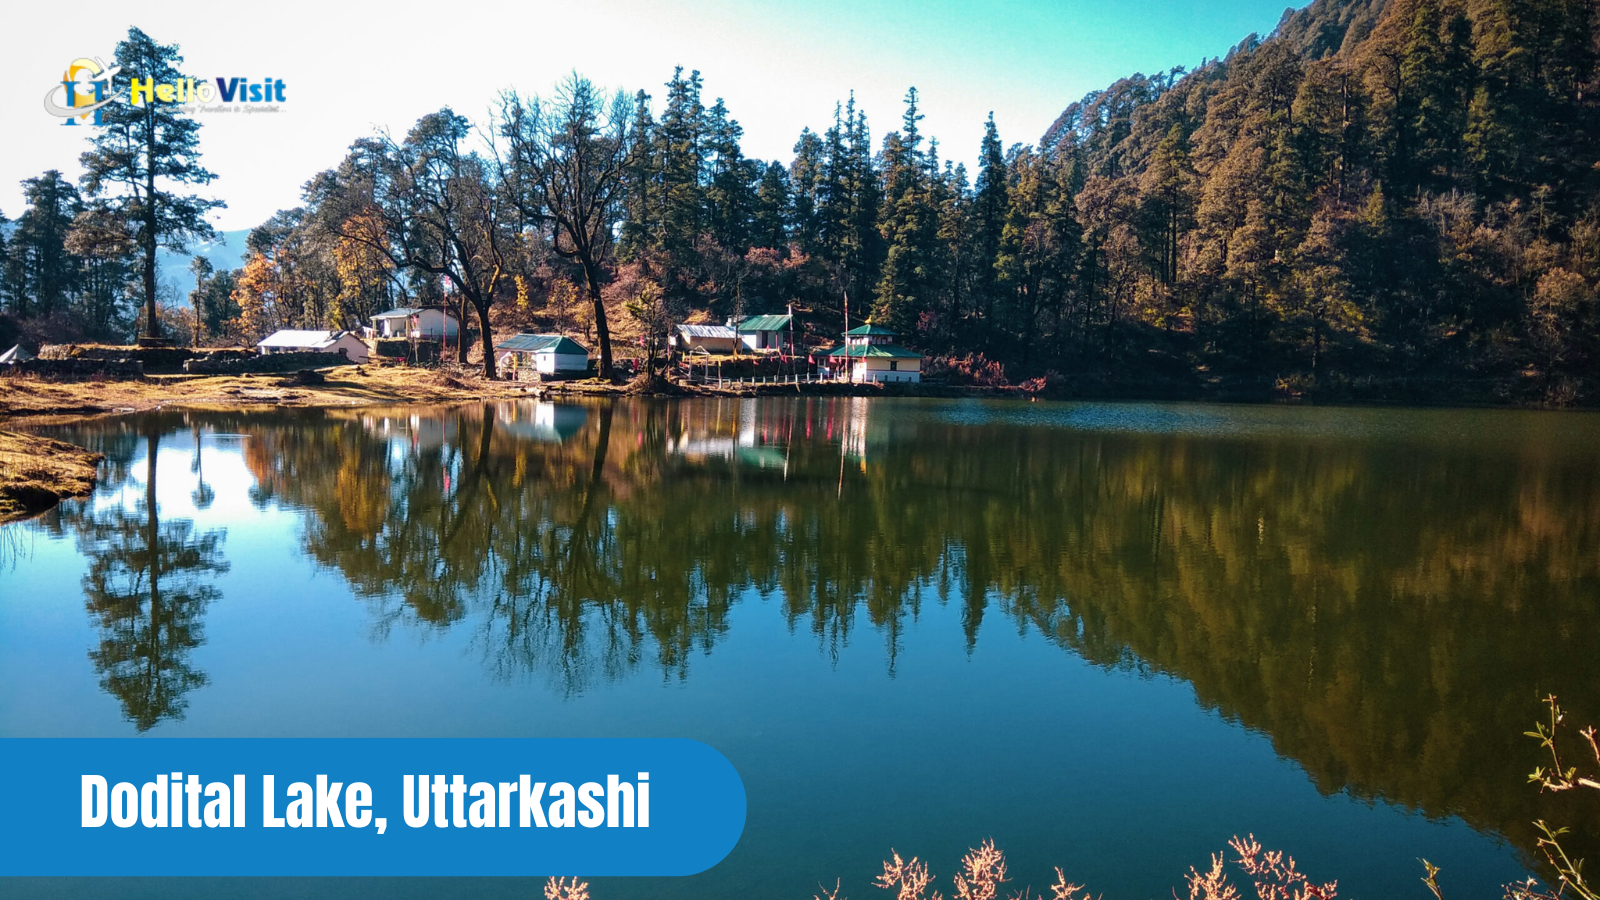 Dodital Lake, Uttarkashi